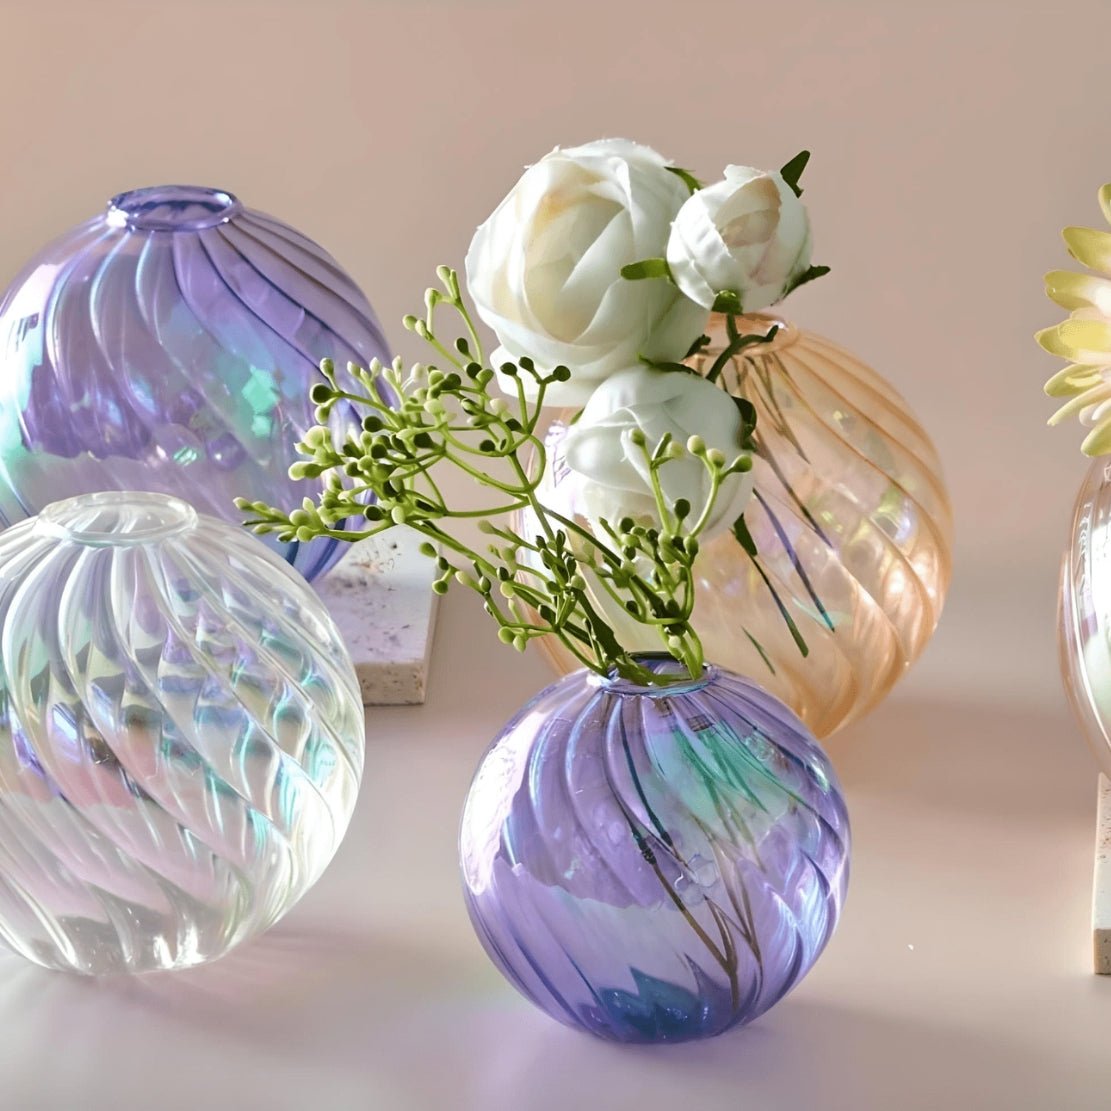 Shiny ball glass vases